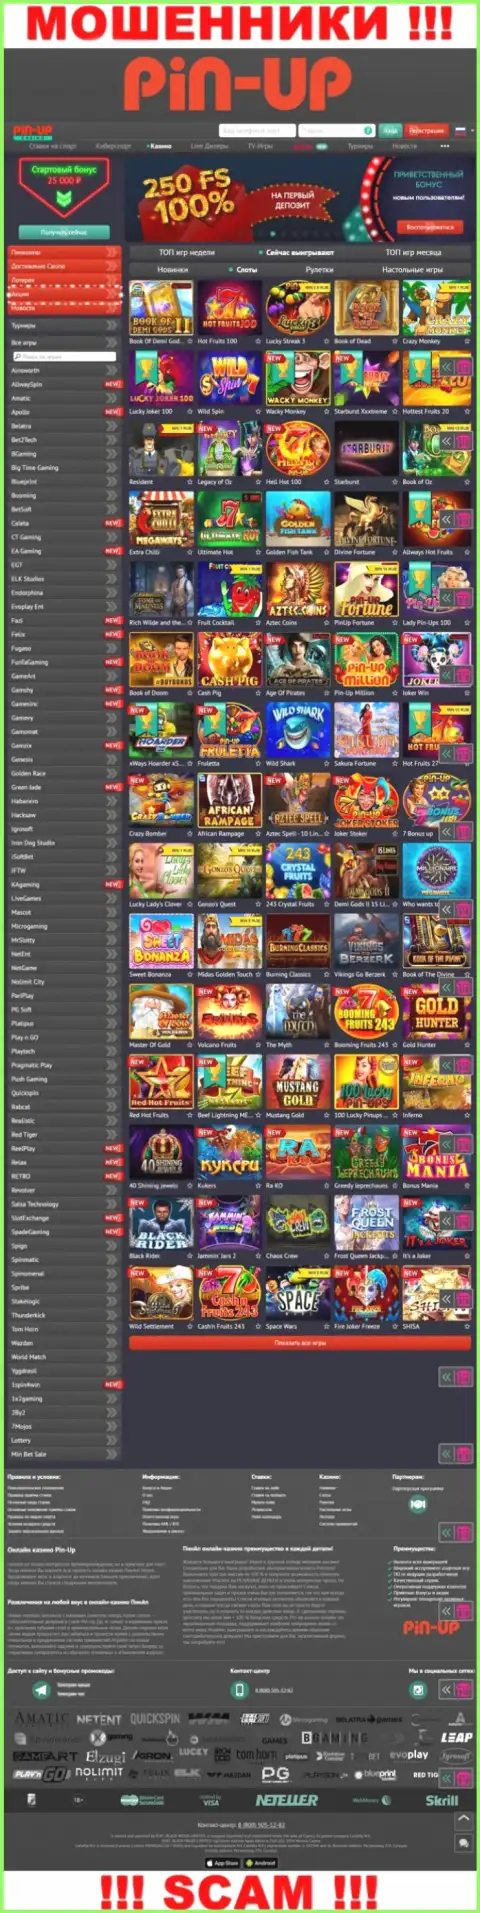 Pin-Up Casino - это ресурс мошенников Pin-Up Casino